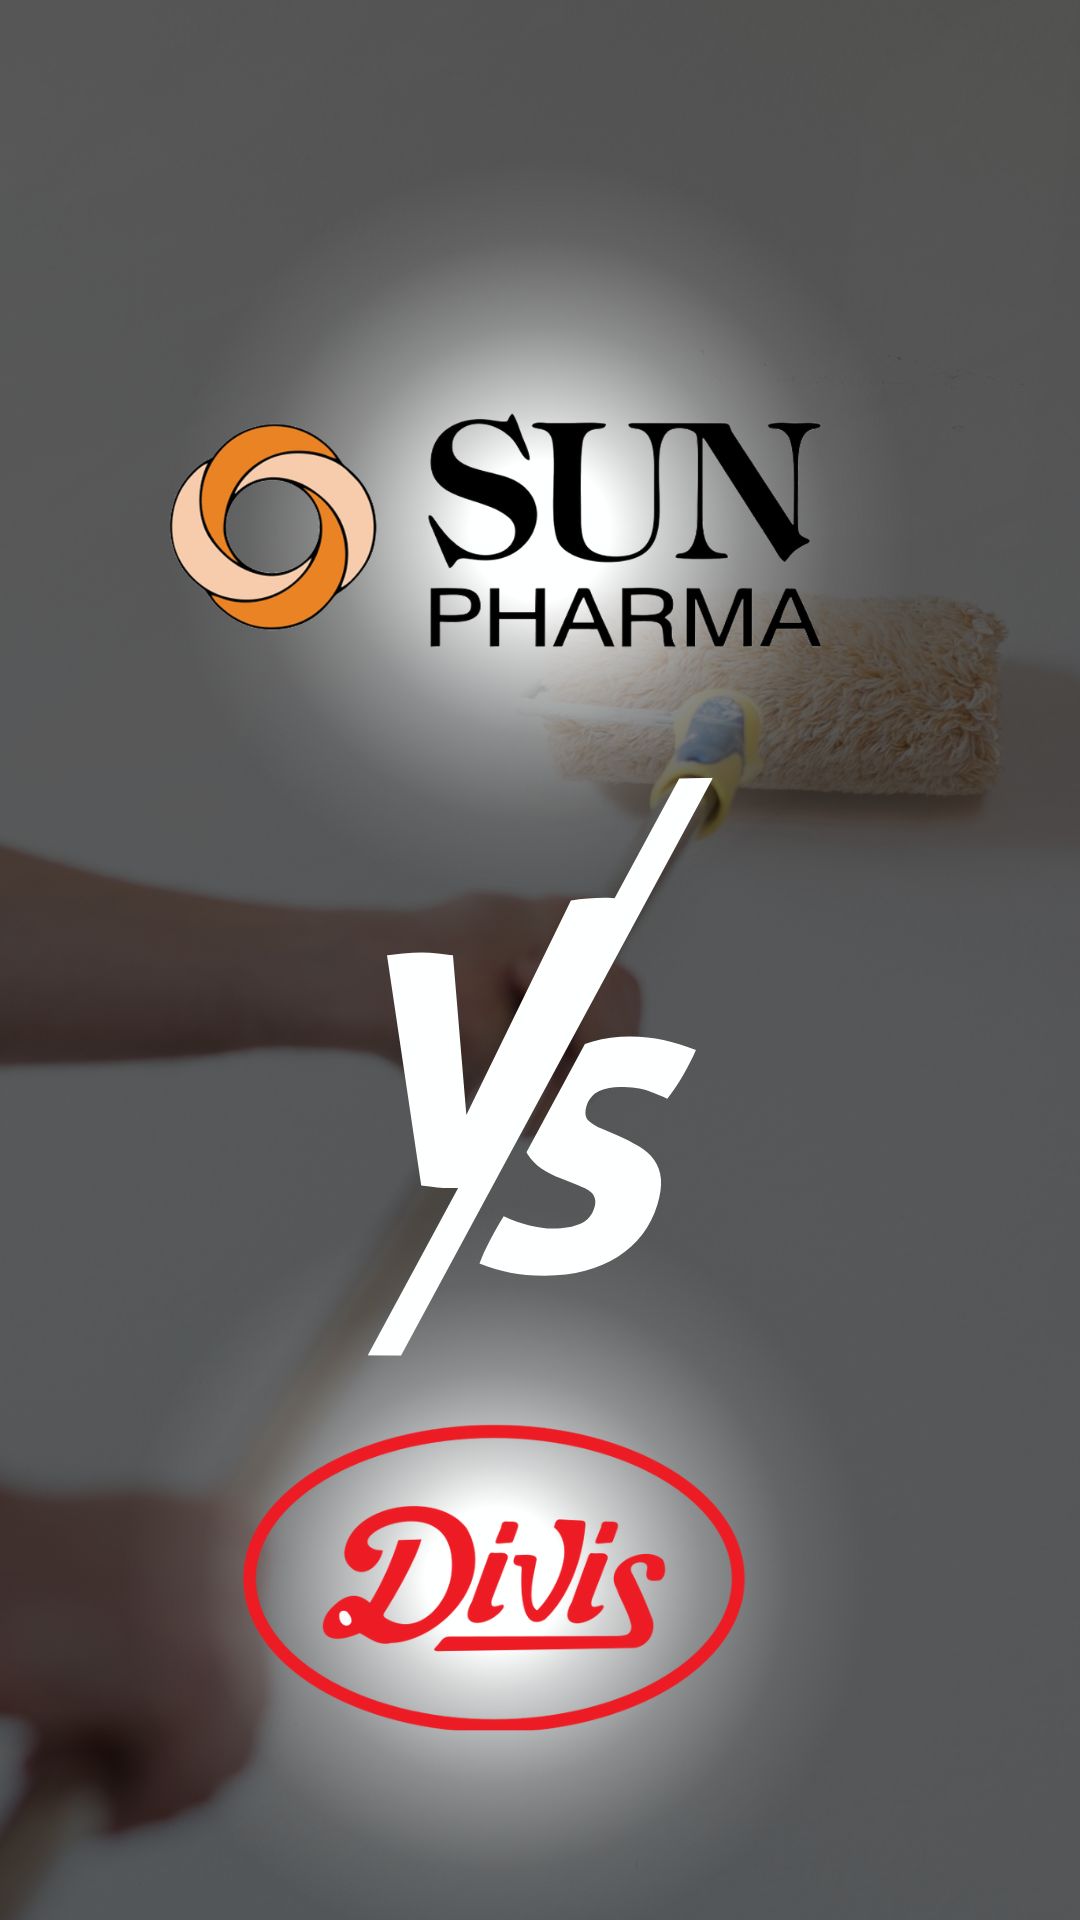 Sun Pharma reports bigger-than-expected rise in Q2 profit